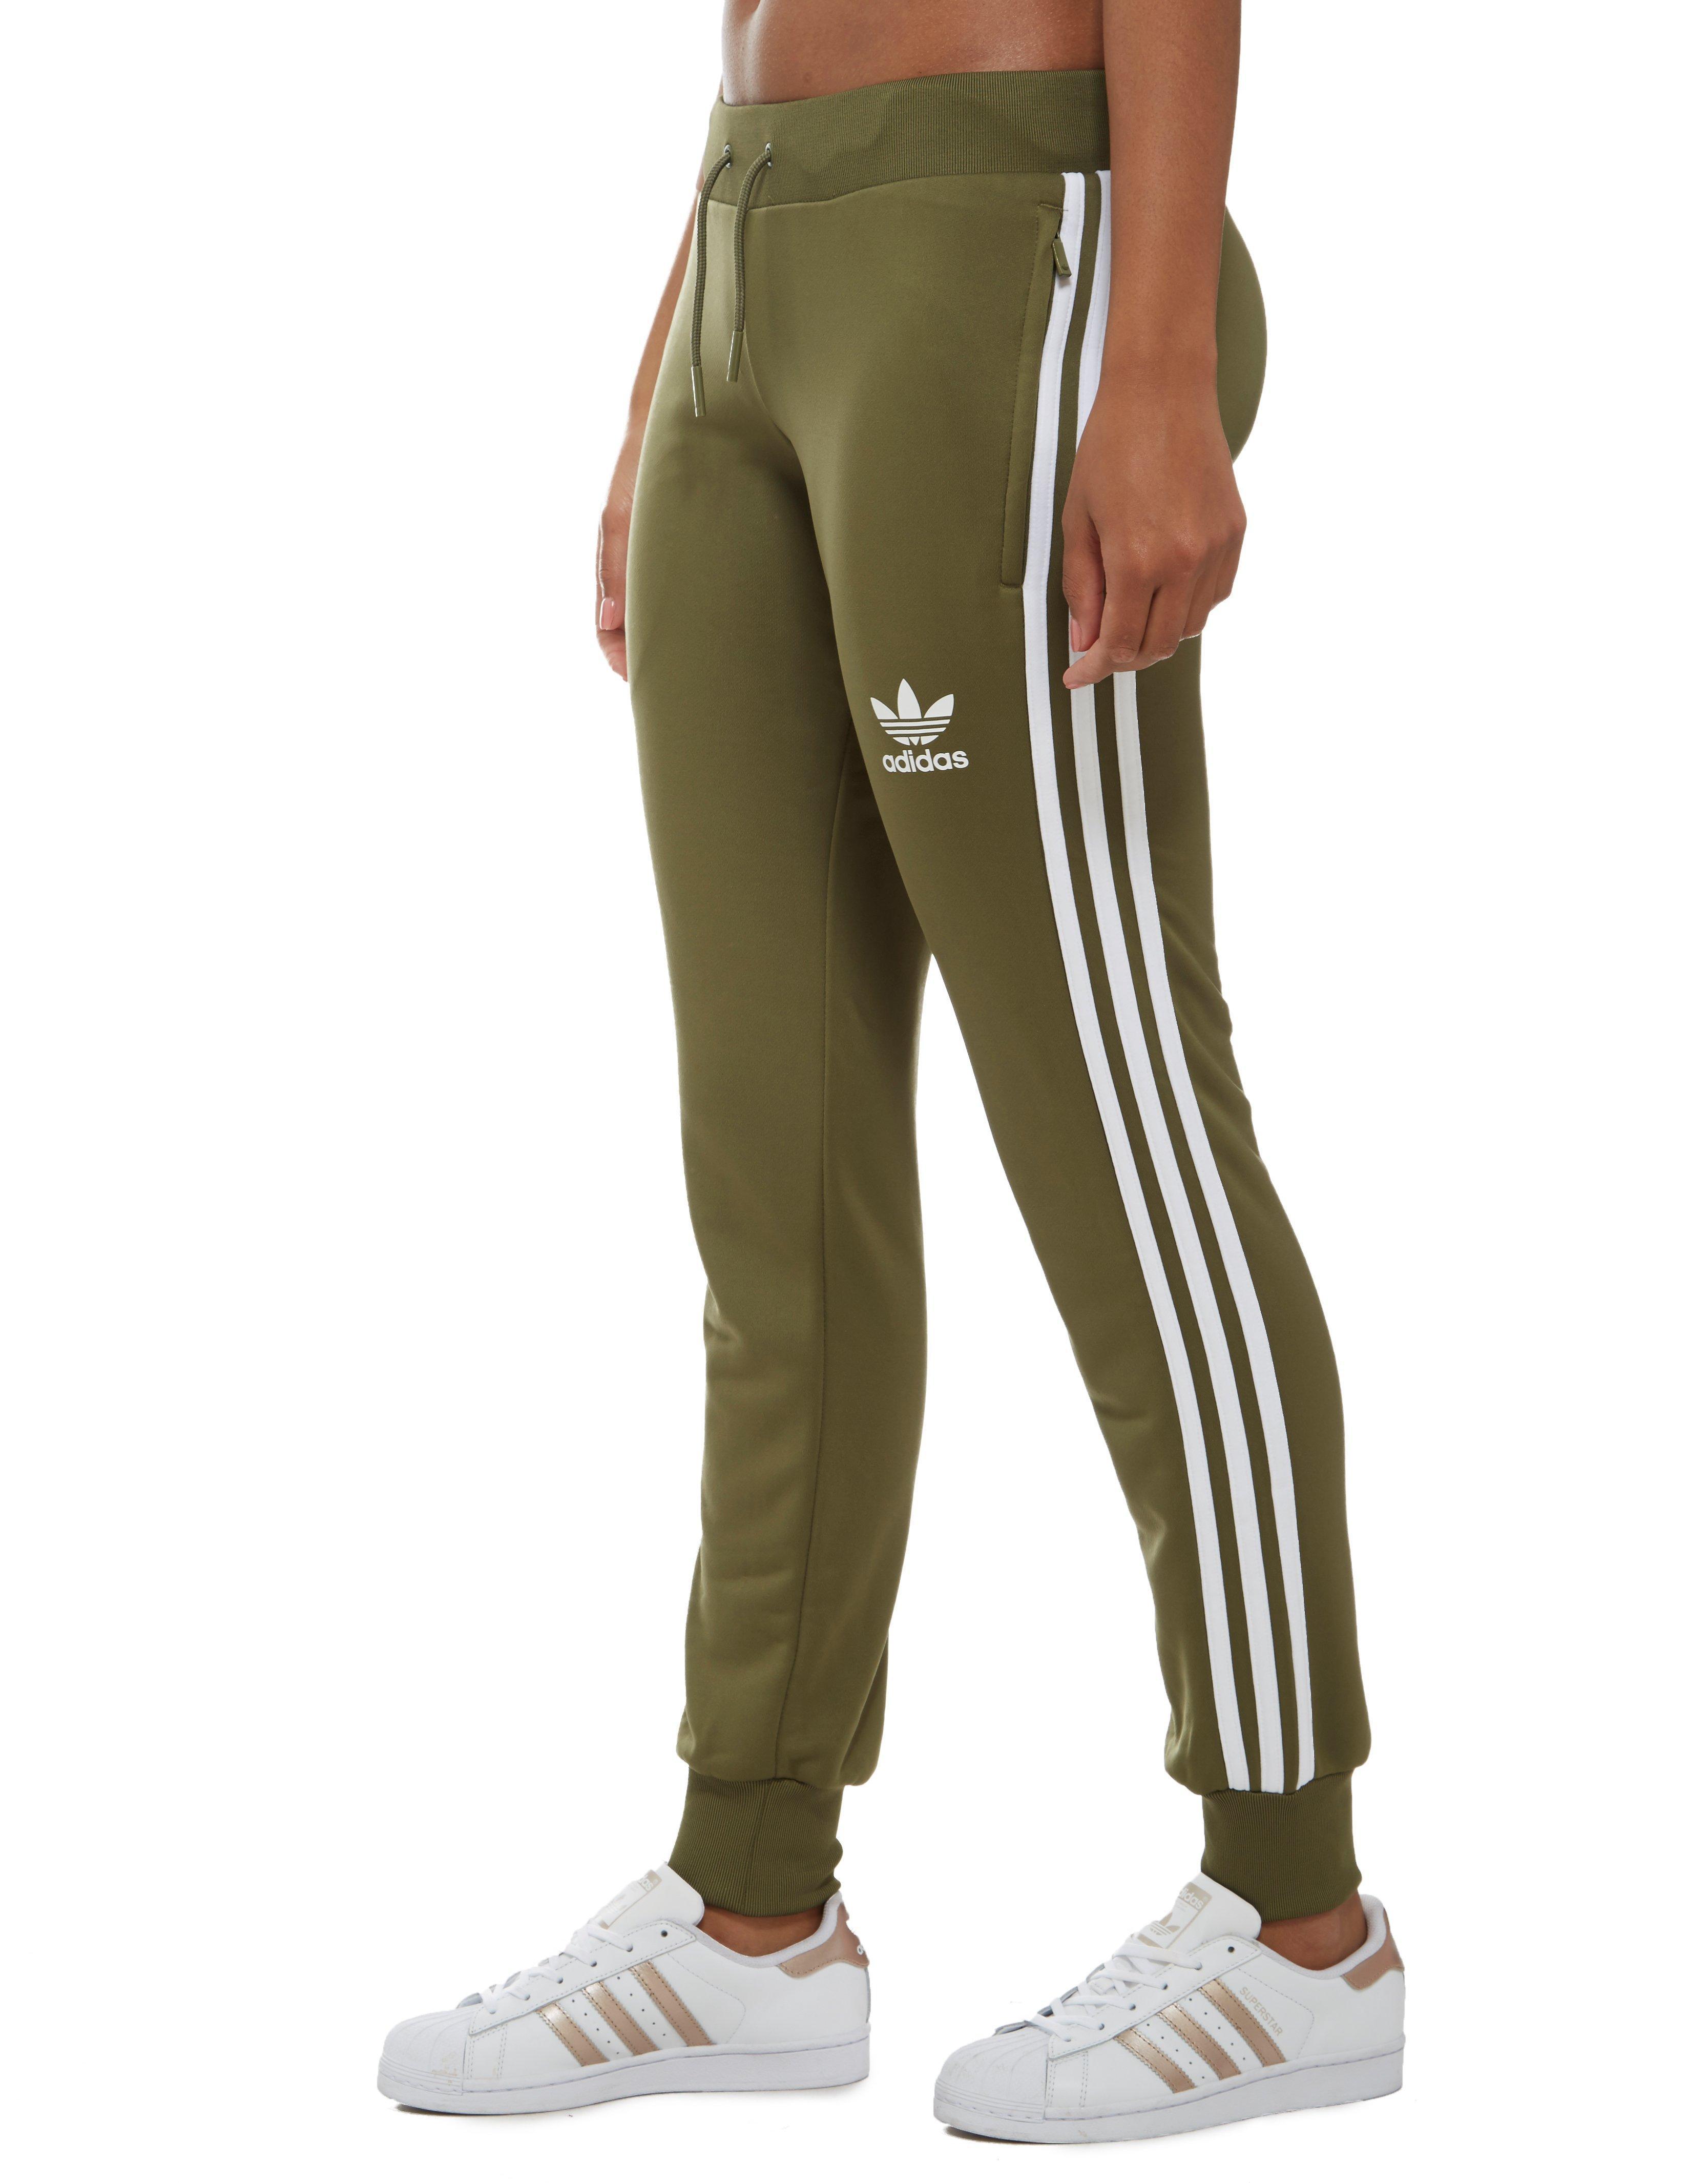 Adidas Originals Three Stripe Track Pants In Khaki Hot Sale, GET 51% OFF,  gig-uast.ac.ir